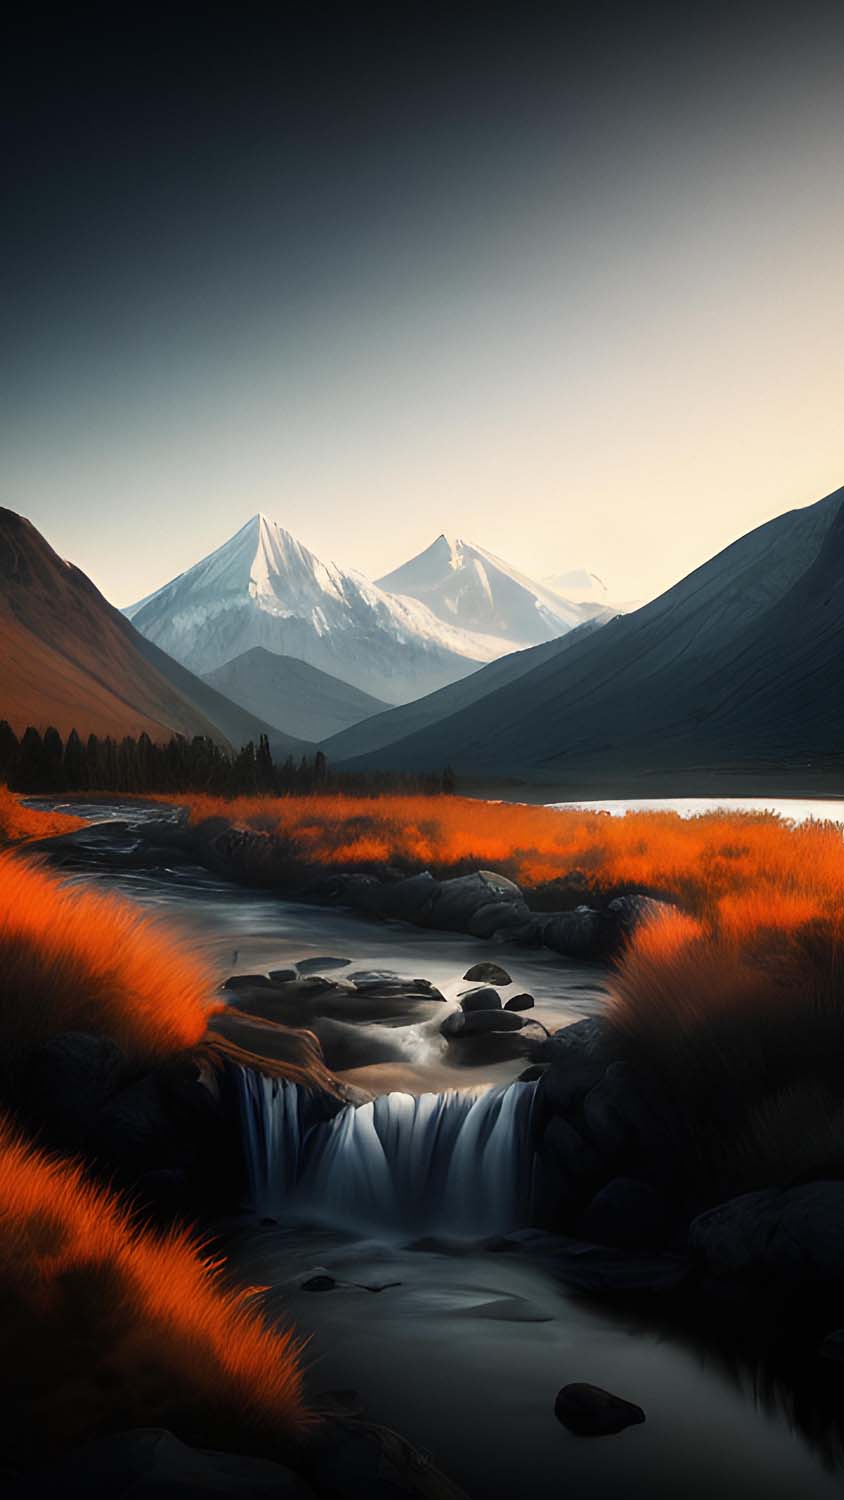 River Between Mountains iPhone Wallpaper HD